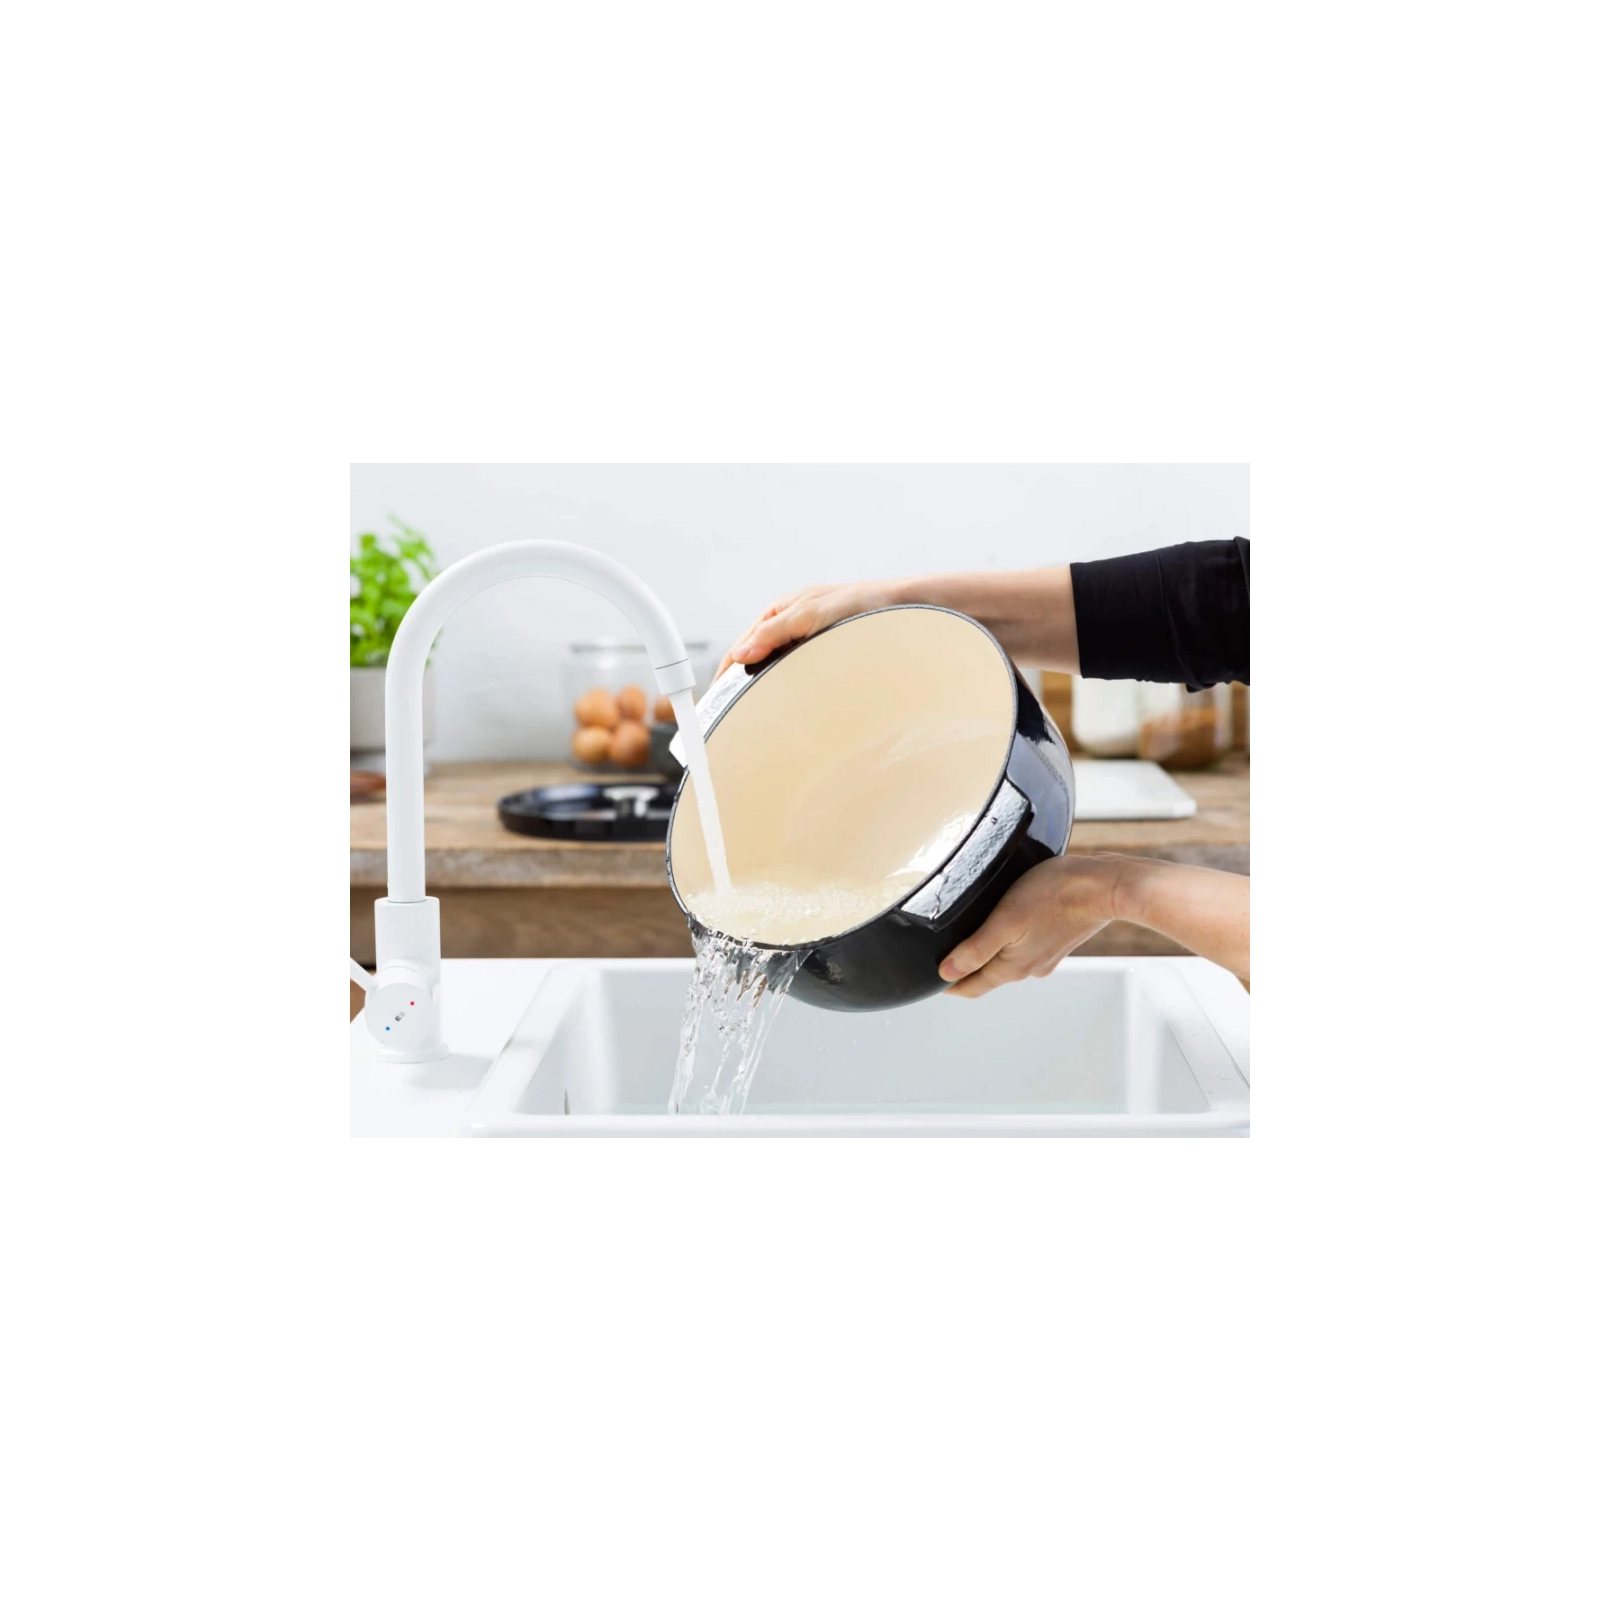 Кастрюля KitchenAid чавунна з кришкою 5,2 л Мигдалевий крем (CC006059-001) изображение 7